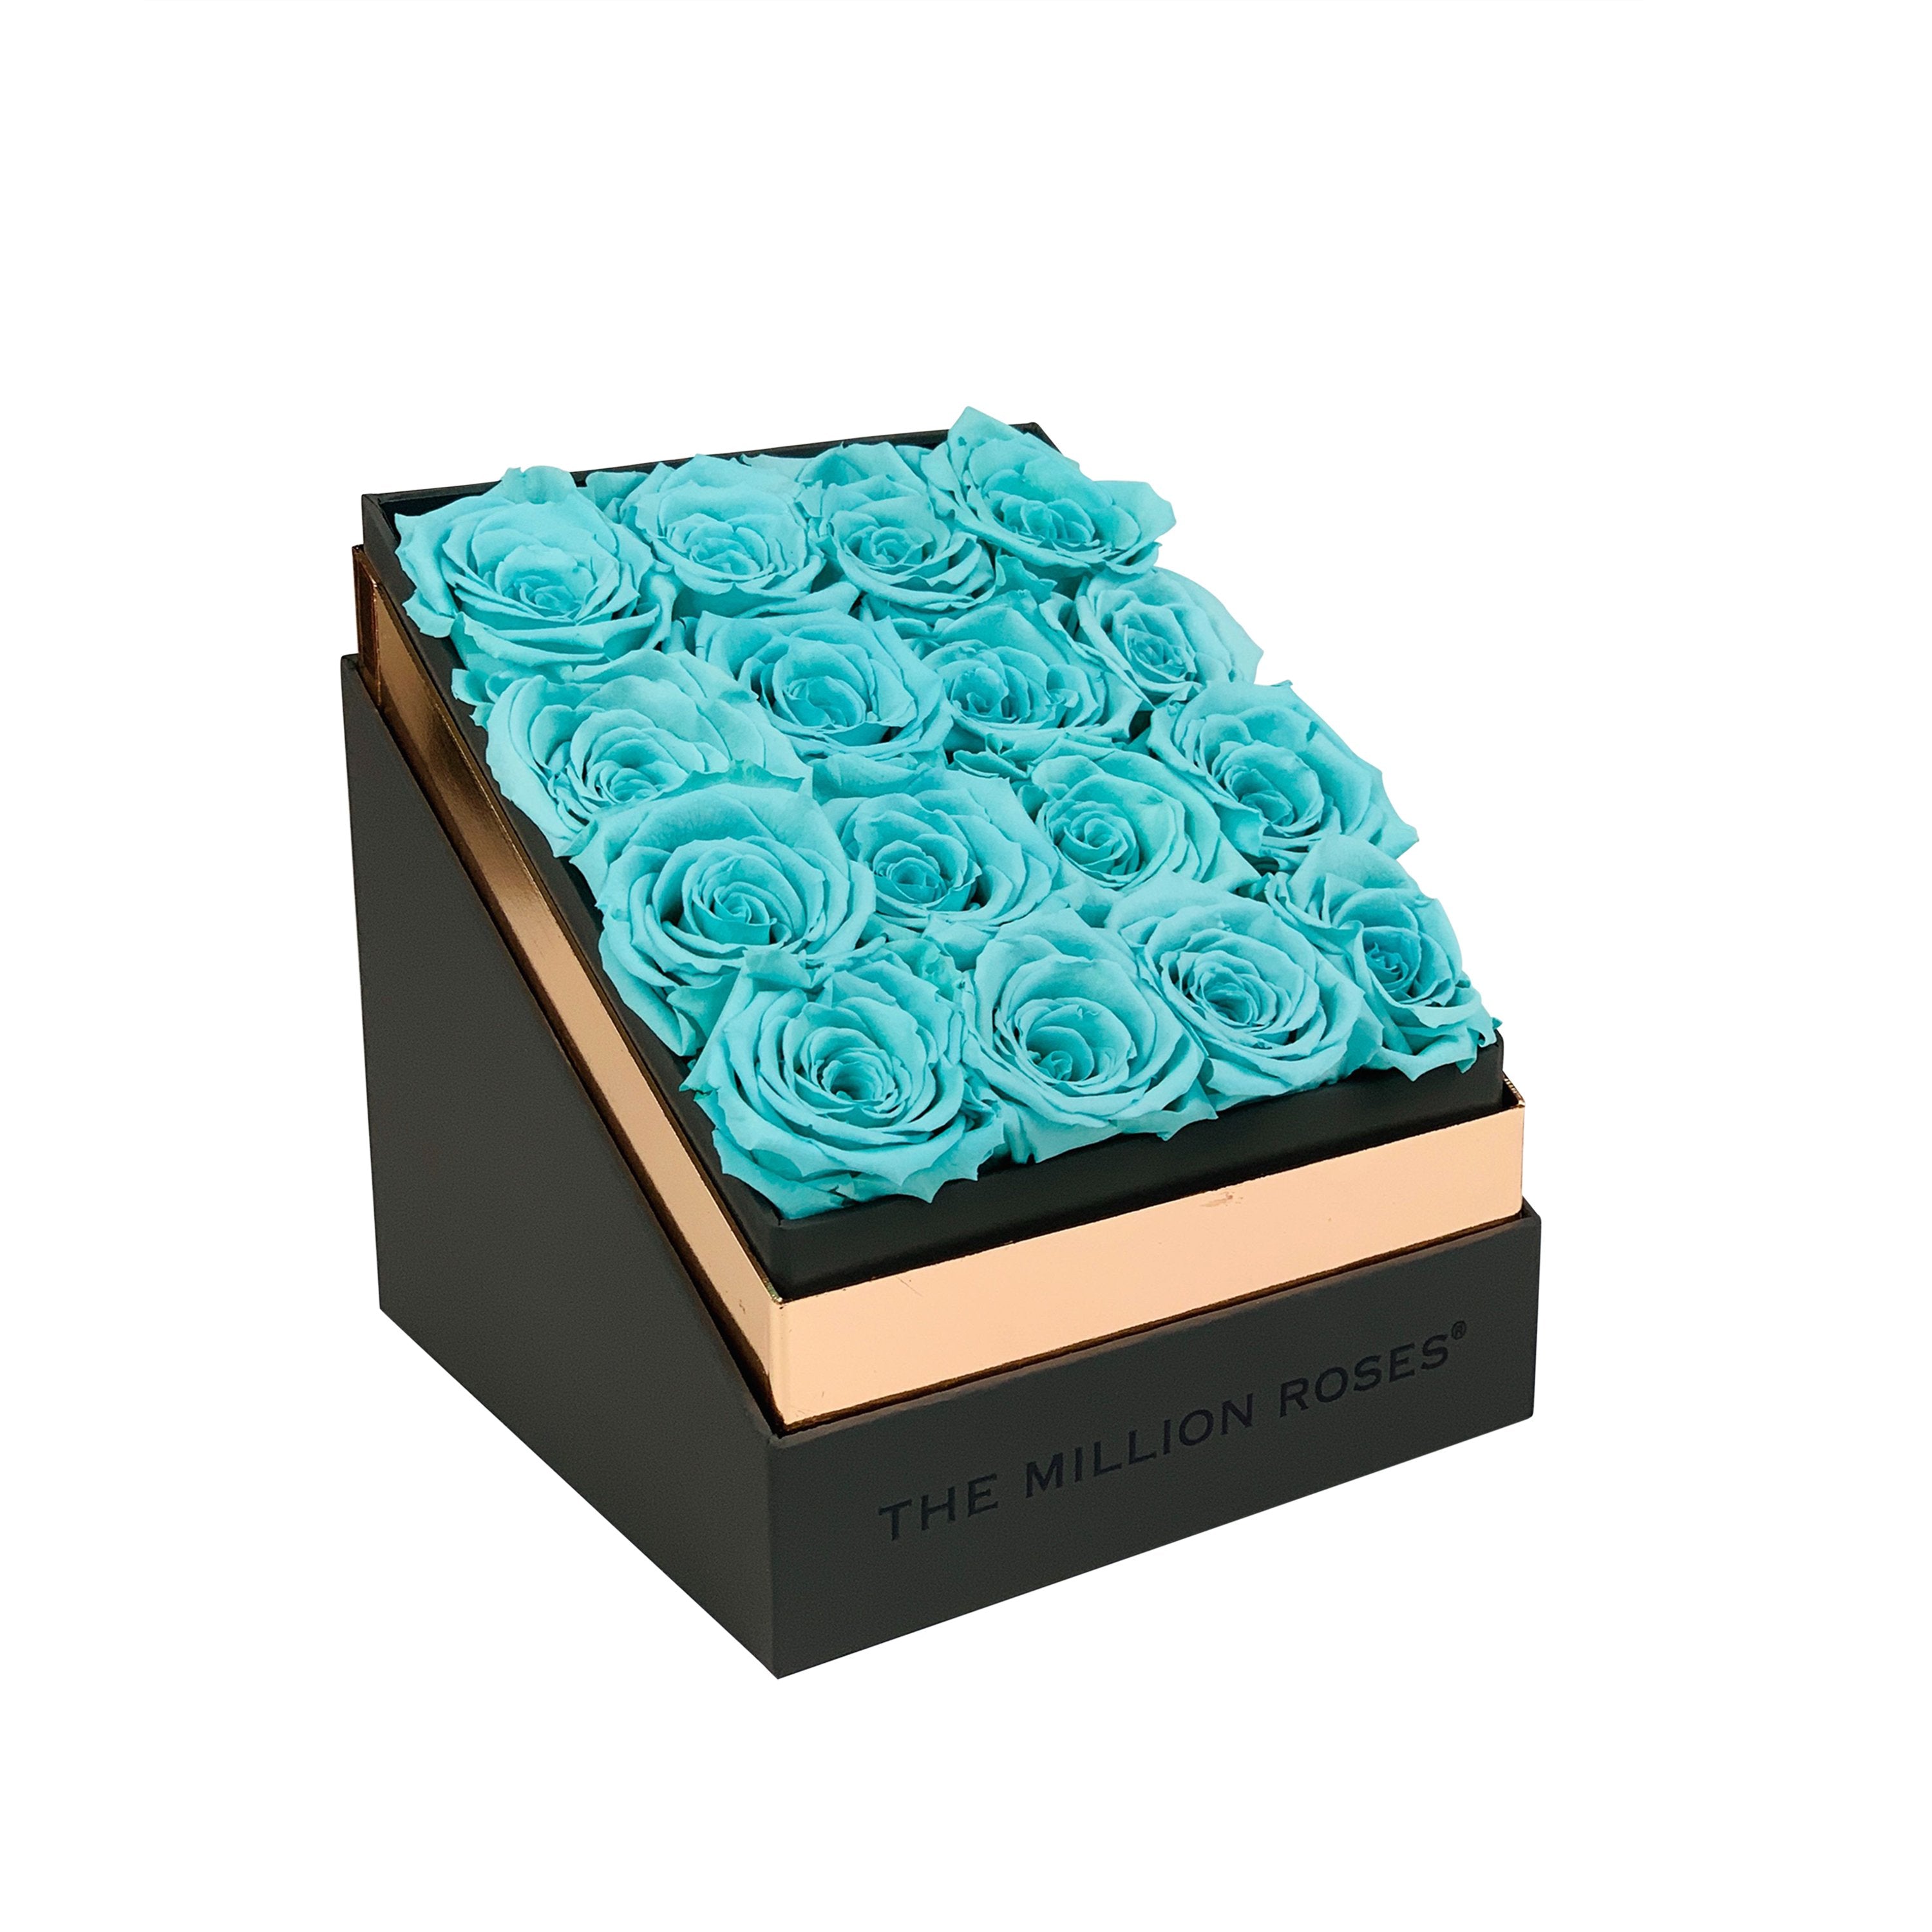 The Square - Gray Box - Tiffany Blue Roses